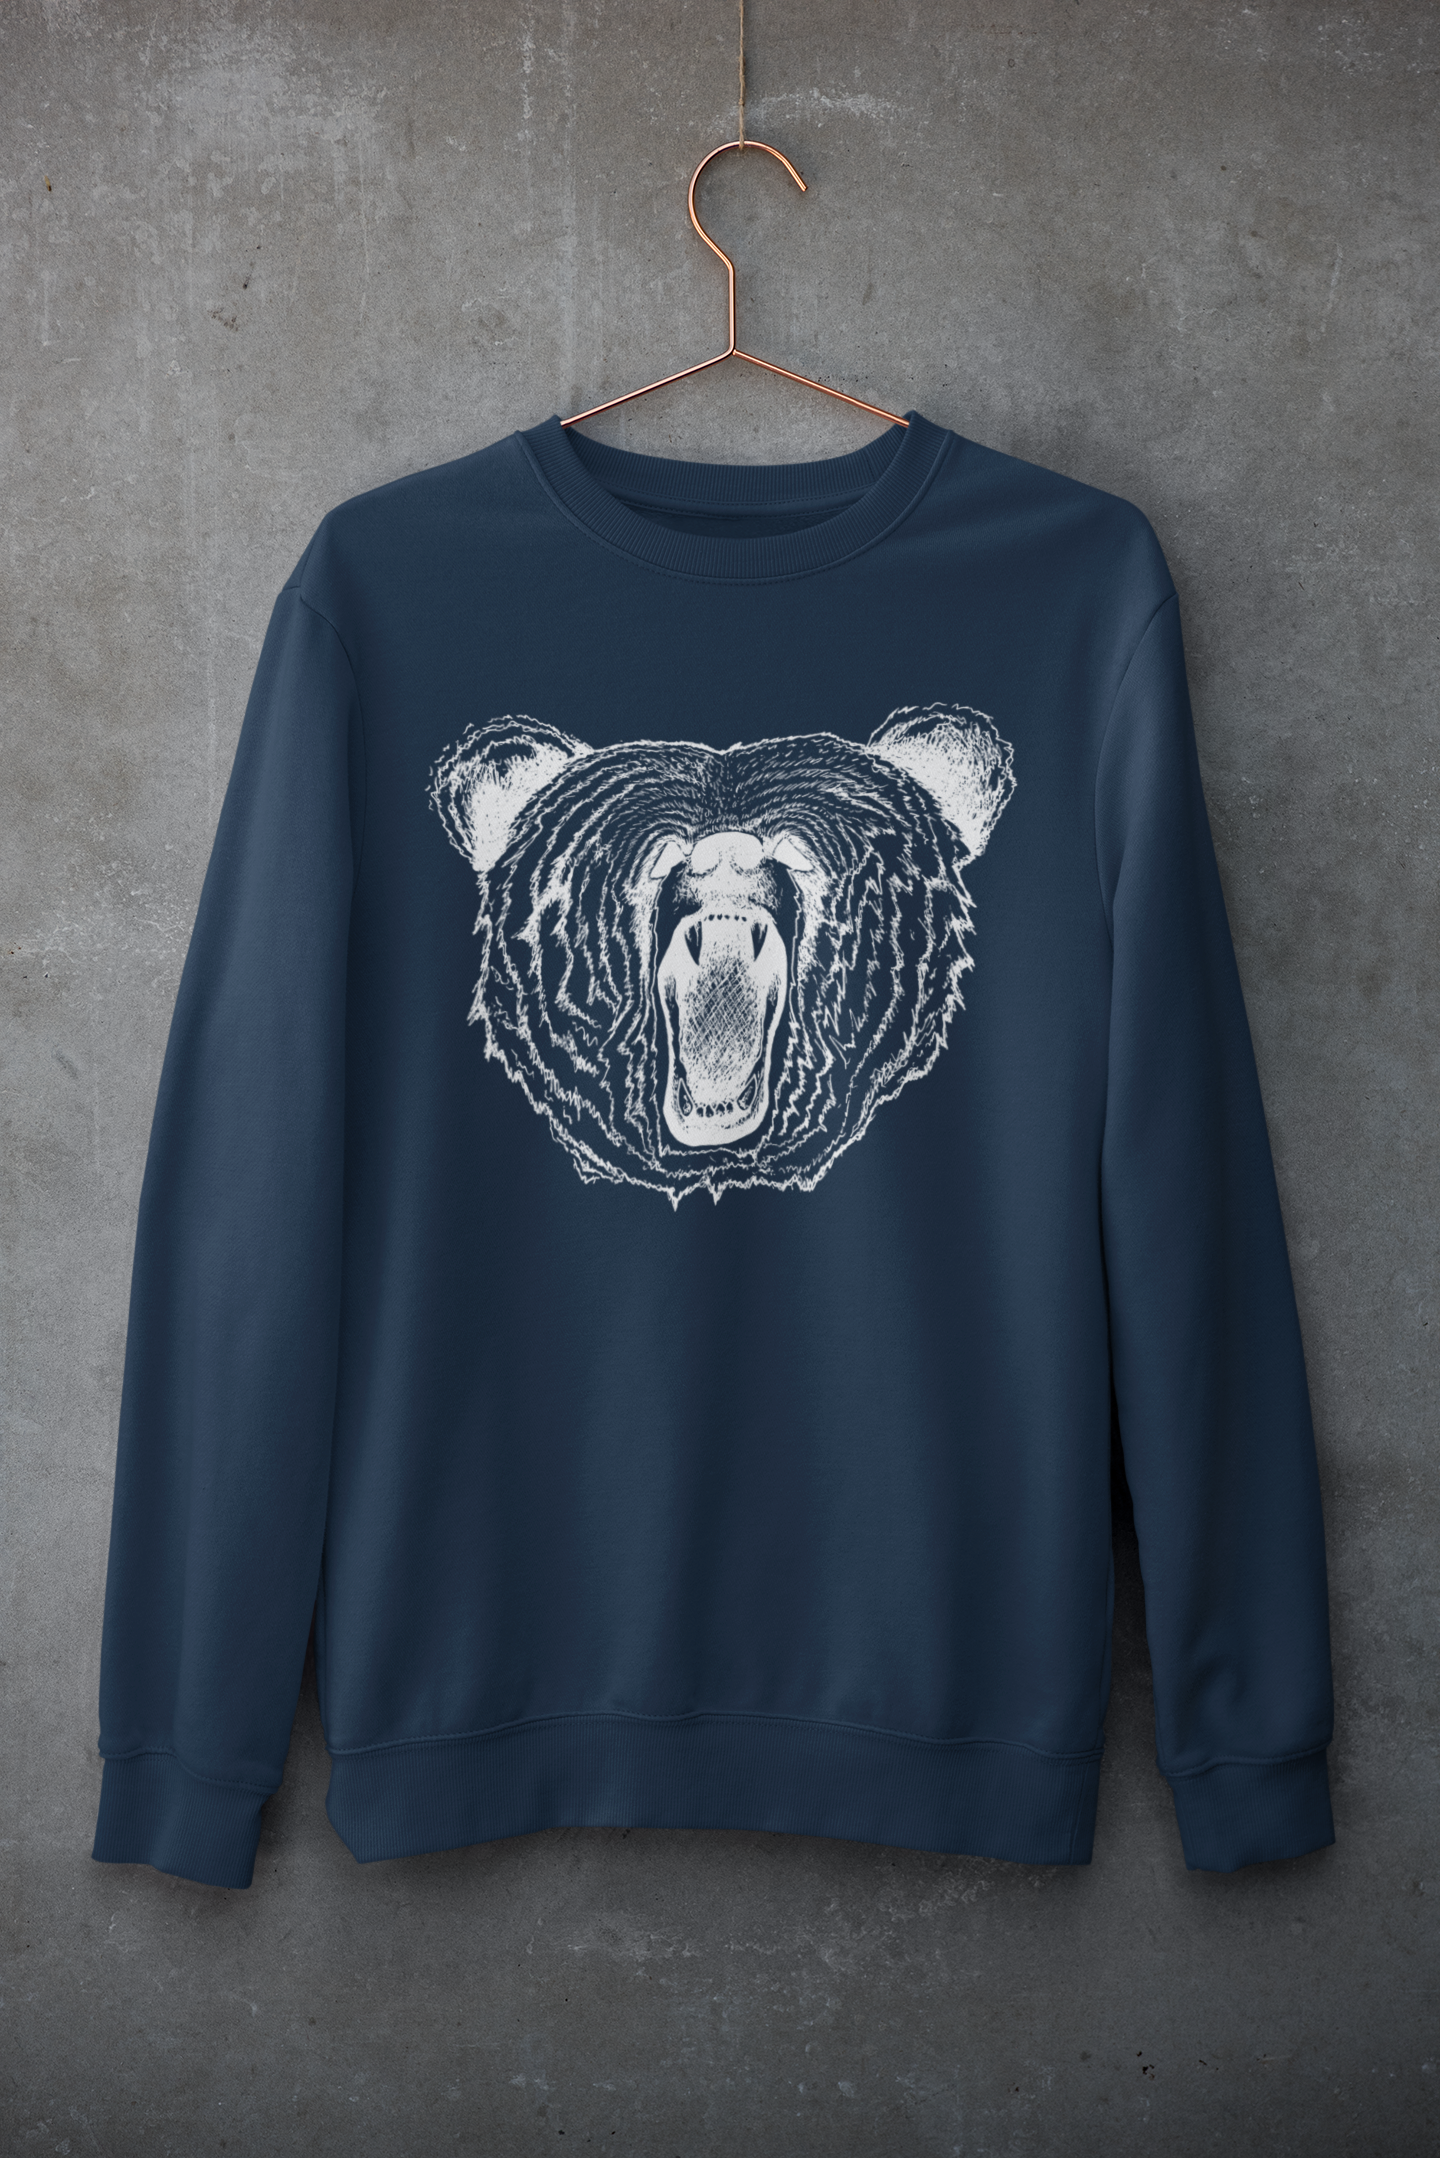 Bear with Me Crew neck sweatshirt – Loyal Citizen Clothing